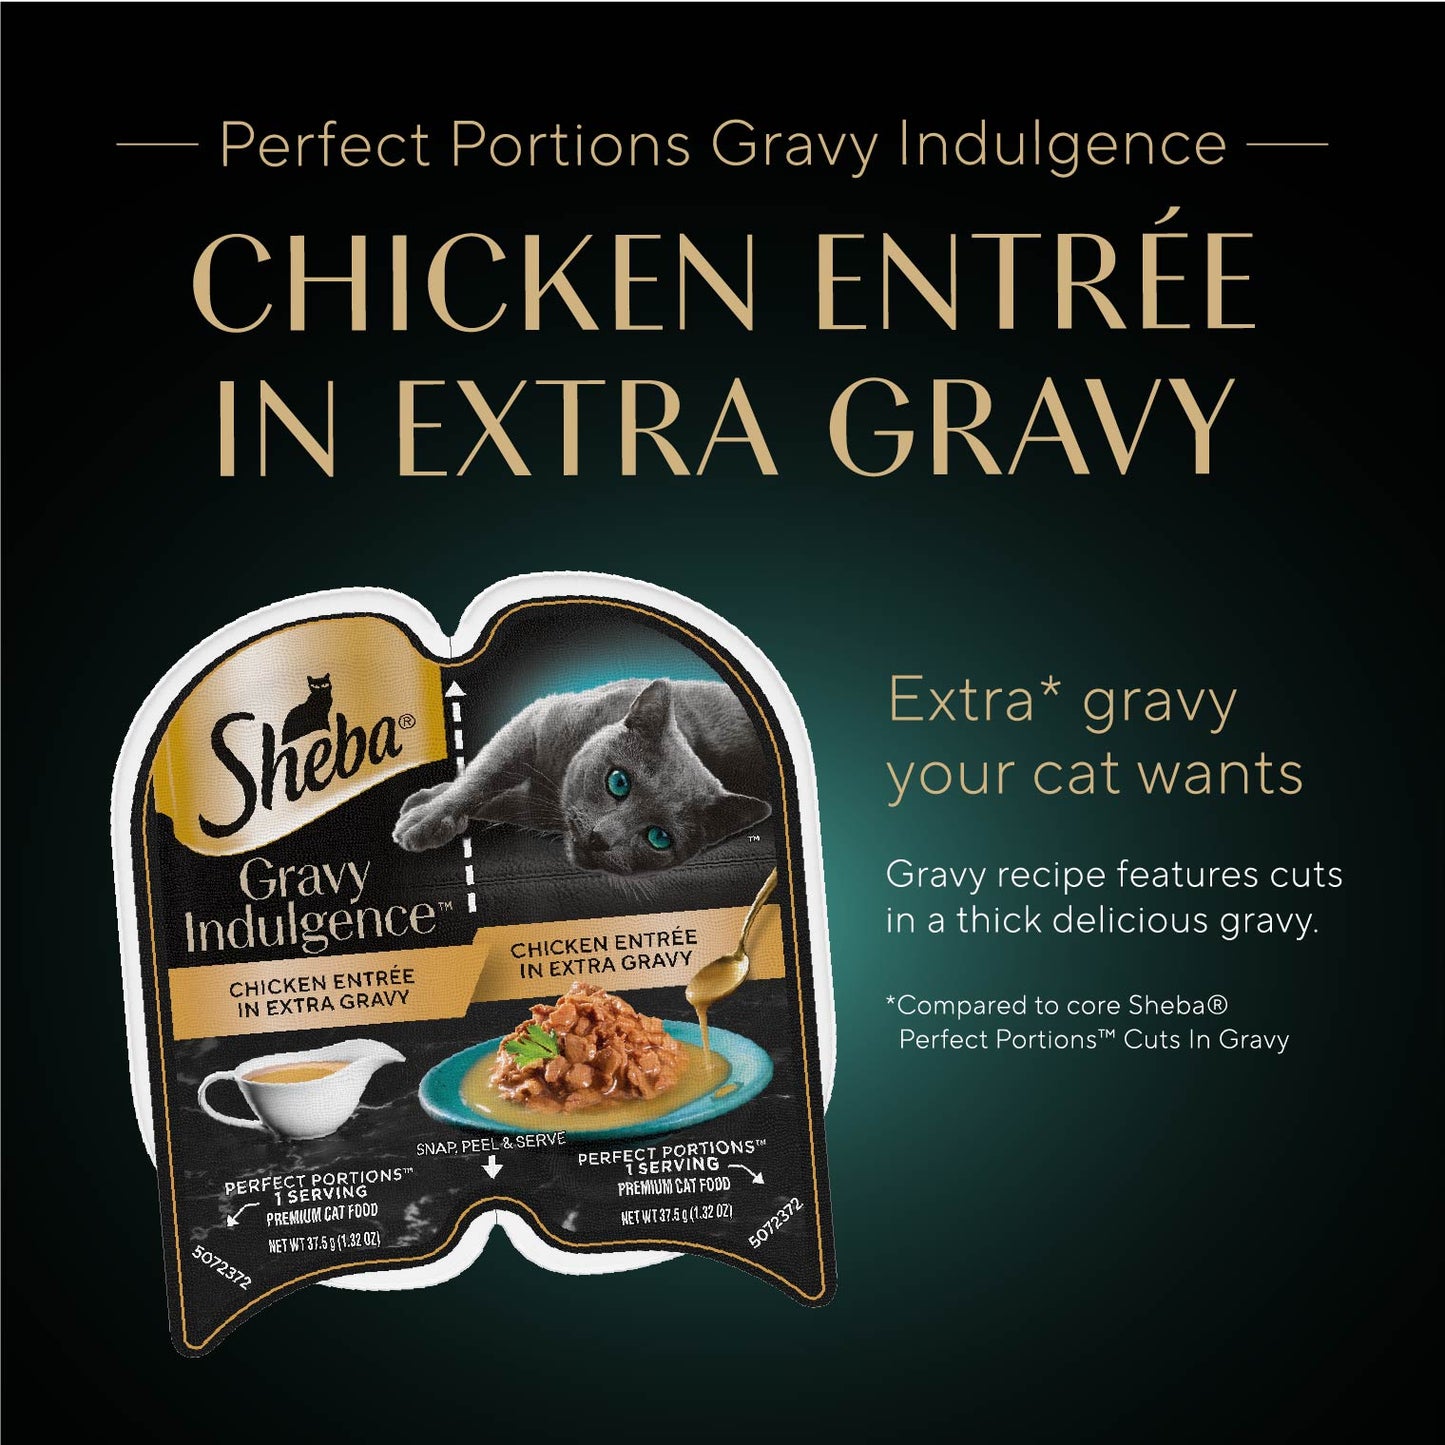 SHEBA Gravy Indulgence Adult Wet Cat Food, Chicken Entrée in Extra Gravy, 2.64 oz.